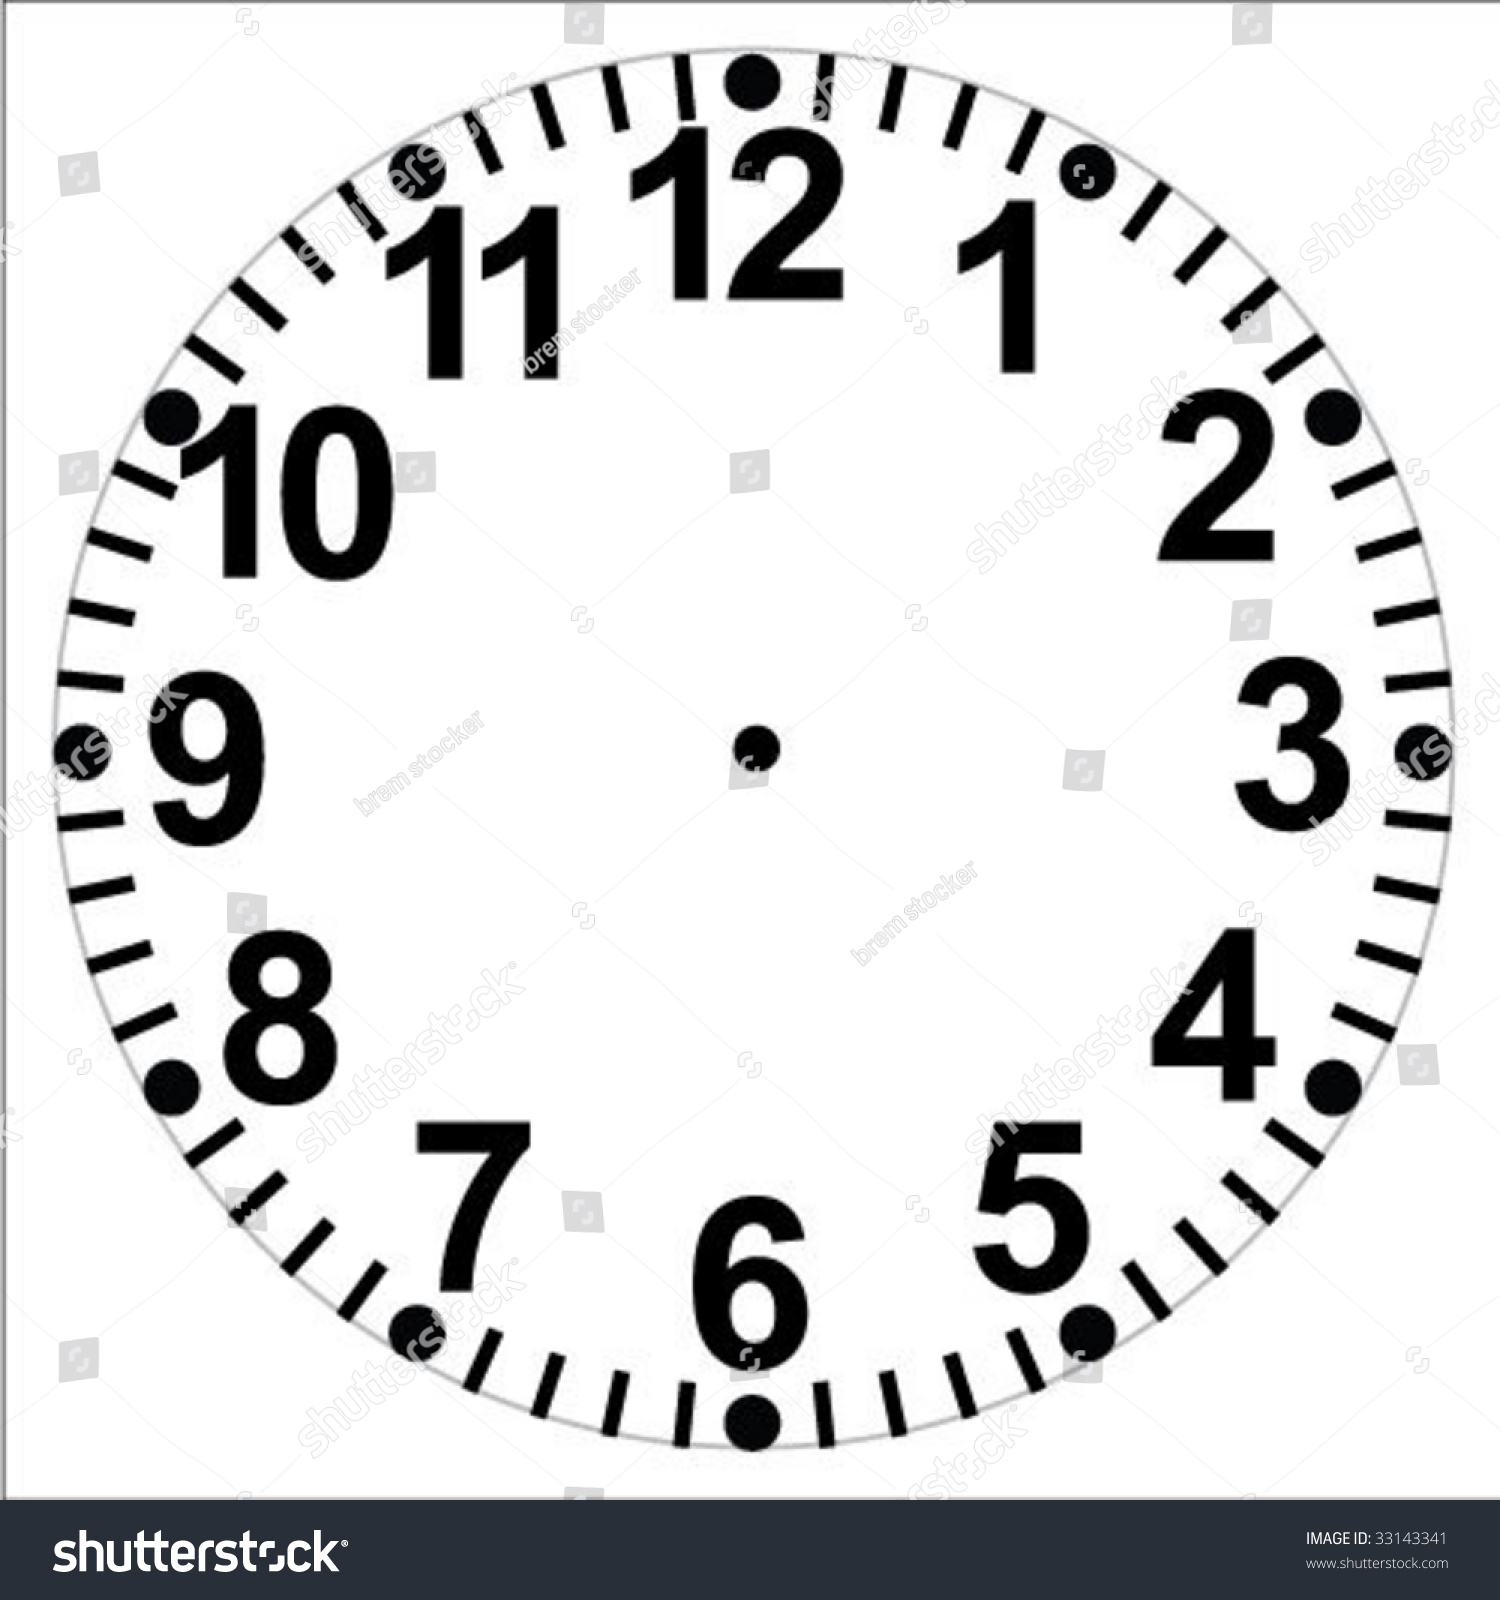 Clock Layout Stock Vector Illustration 33143341 : Shutterstock